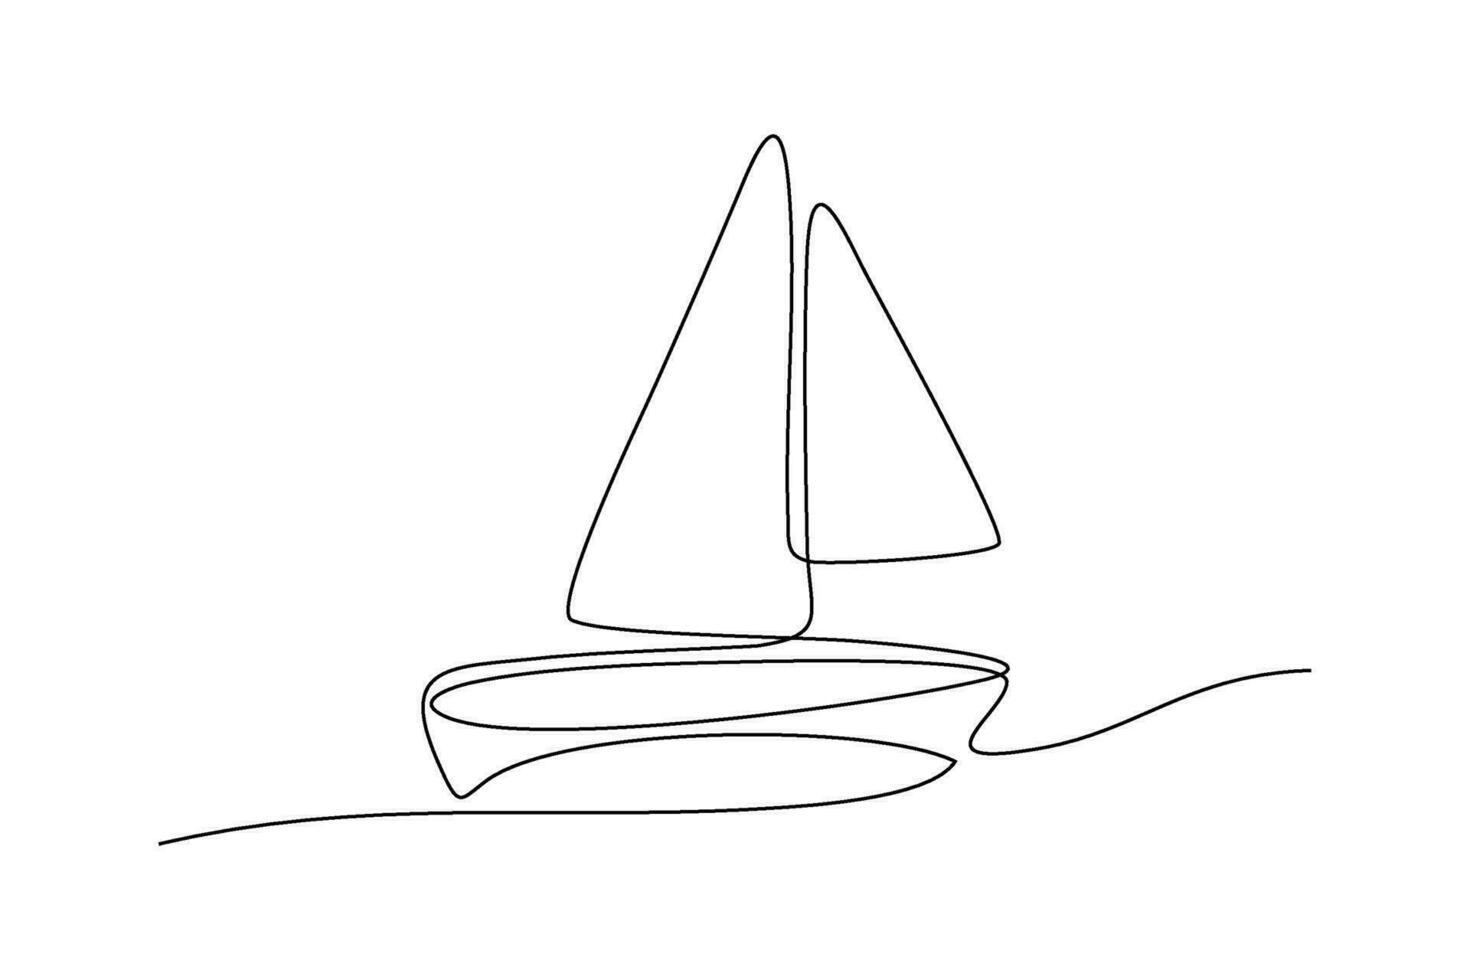 Sailboat continuous line vector illustration